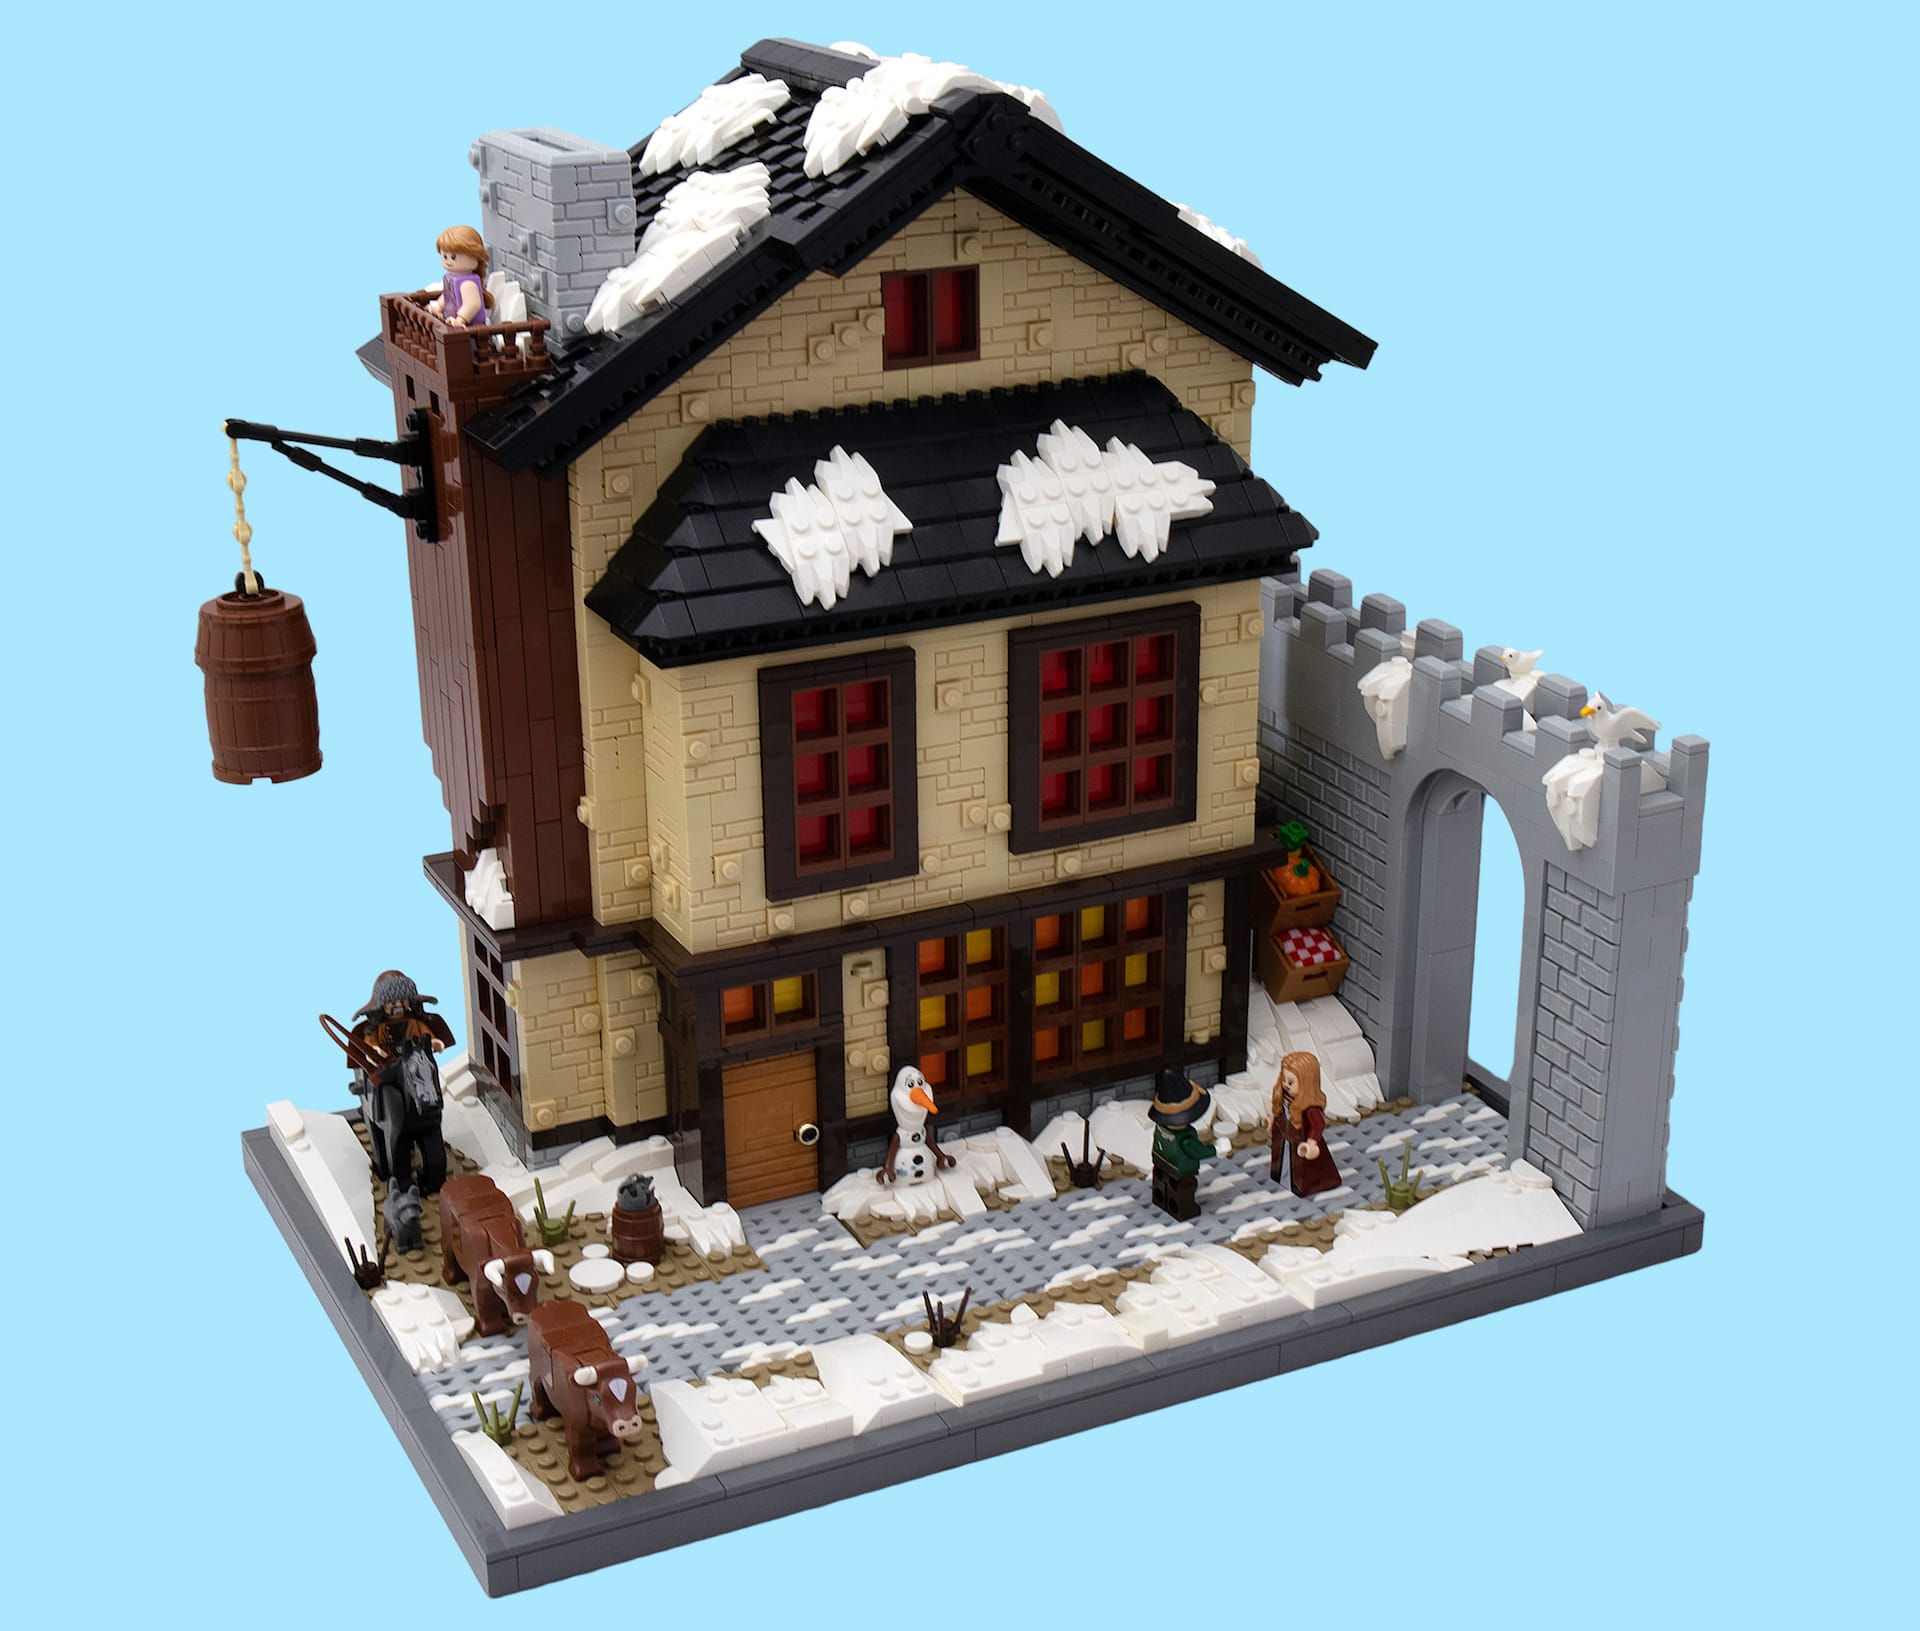 Concurs Winter Brickland – Creatia 3: Alehouse